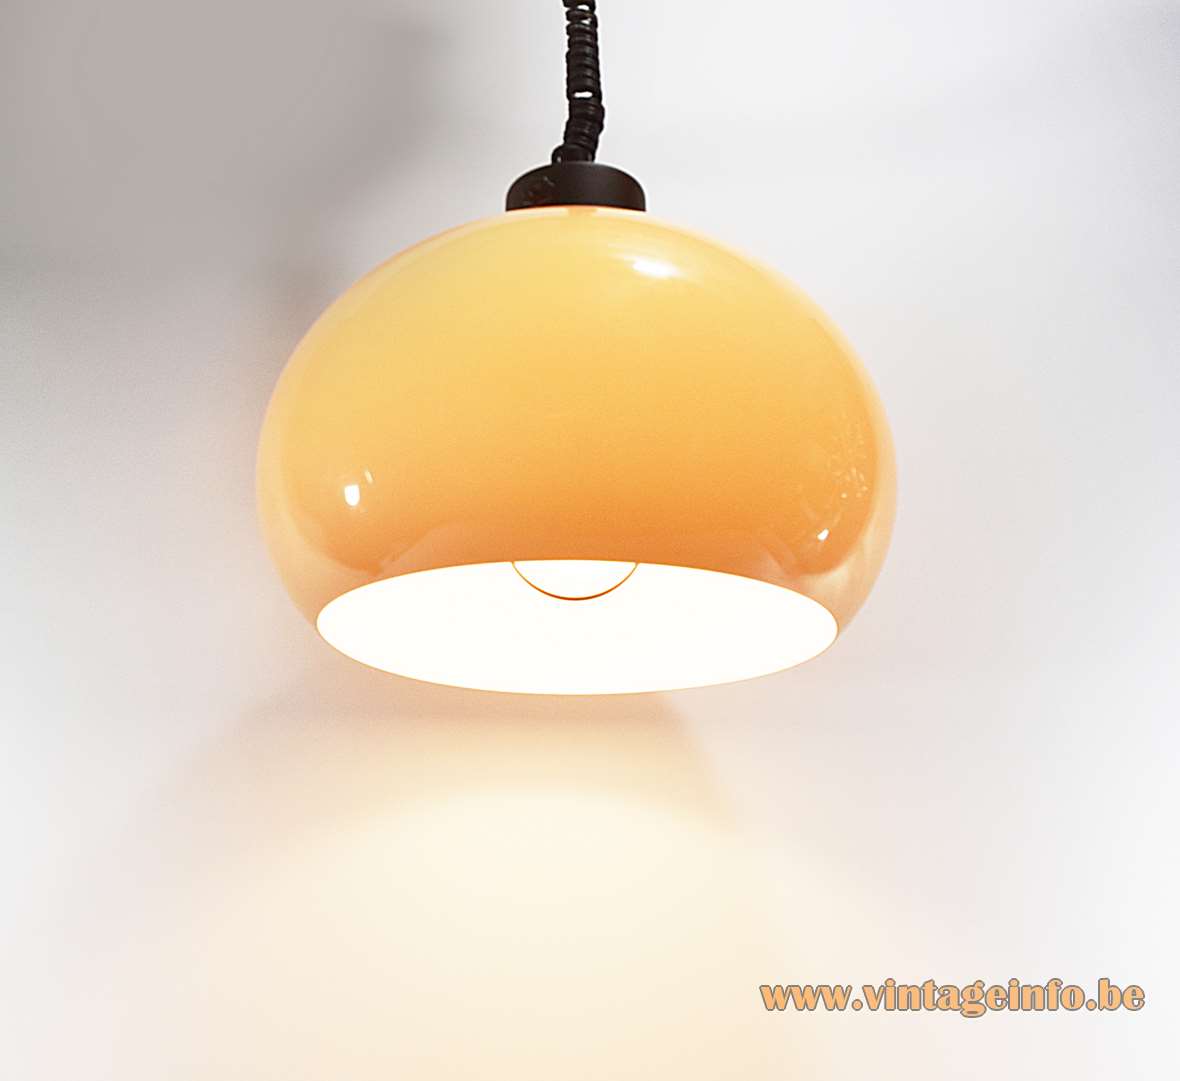 Dijkstra Aladdin pendant lamp big brown acrylic globe lampshade built-in dimmer rise & fall mechanism handle 1970s